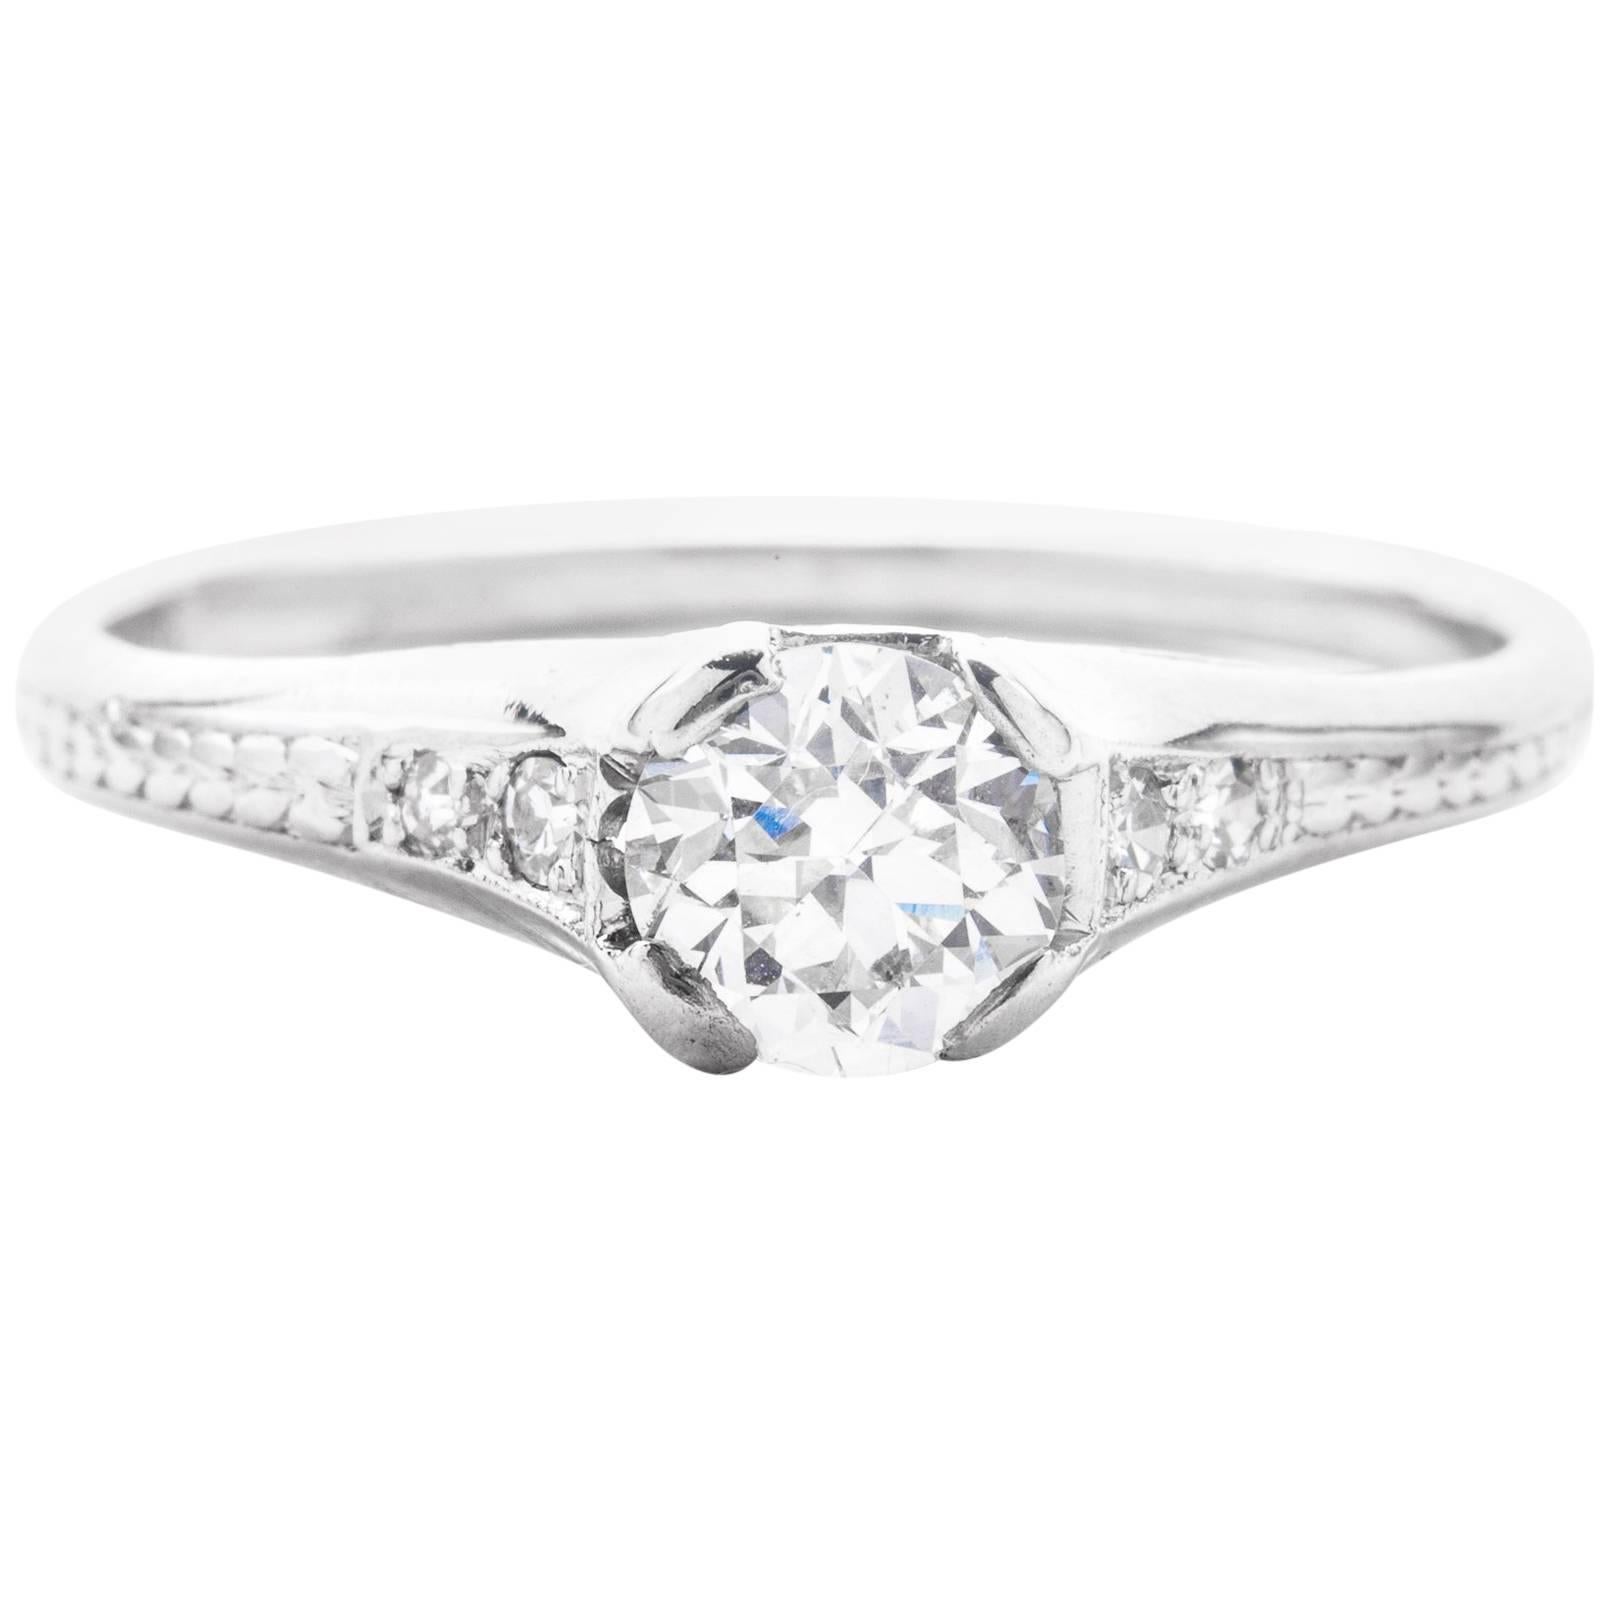 Art Deco Hand Engraved 0.70 Carat Diamond Engagement Ring in Platinum For Sale